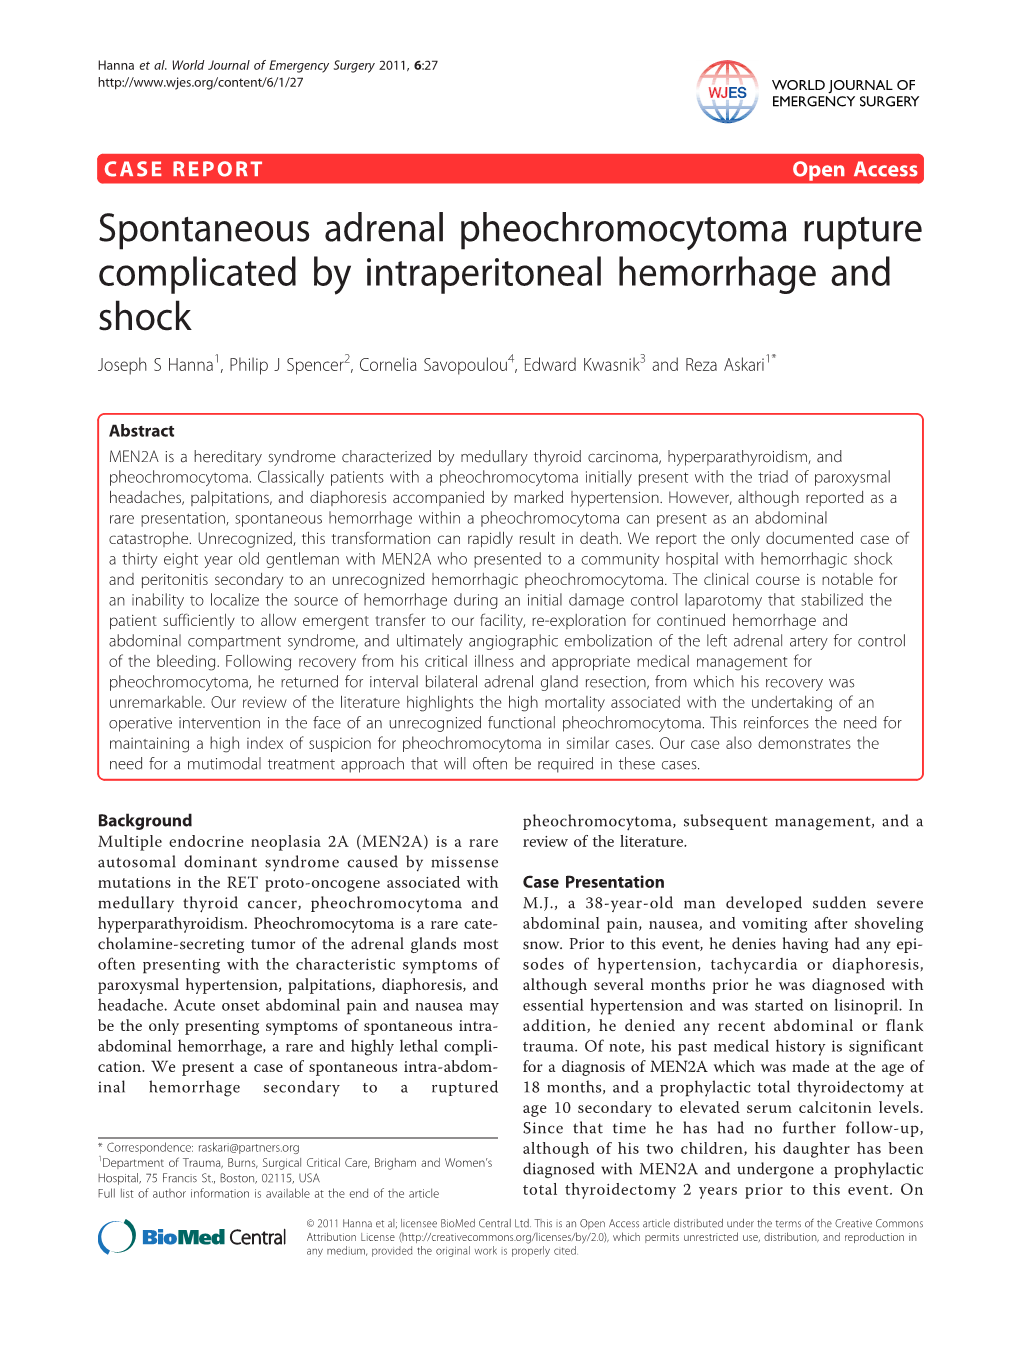 Spontaneous Adrenal Pheochromocytoma Rupture